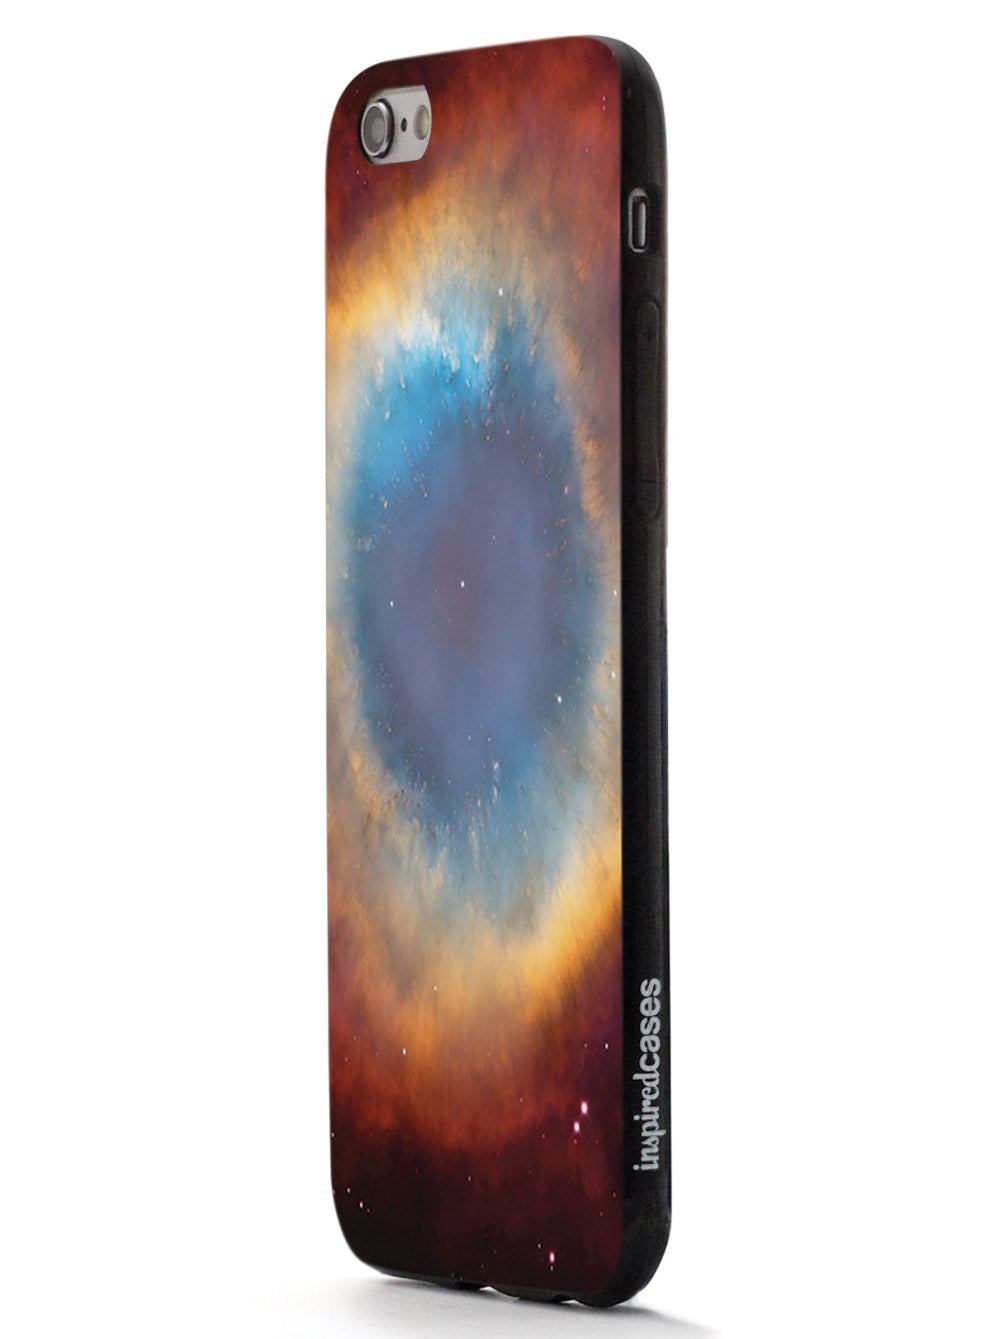 Helix Nebula Vs. 2 Outer Space Planetary Eye of God Case